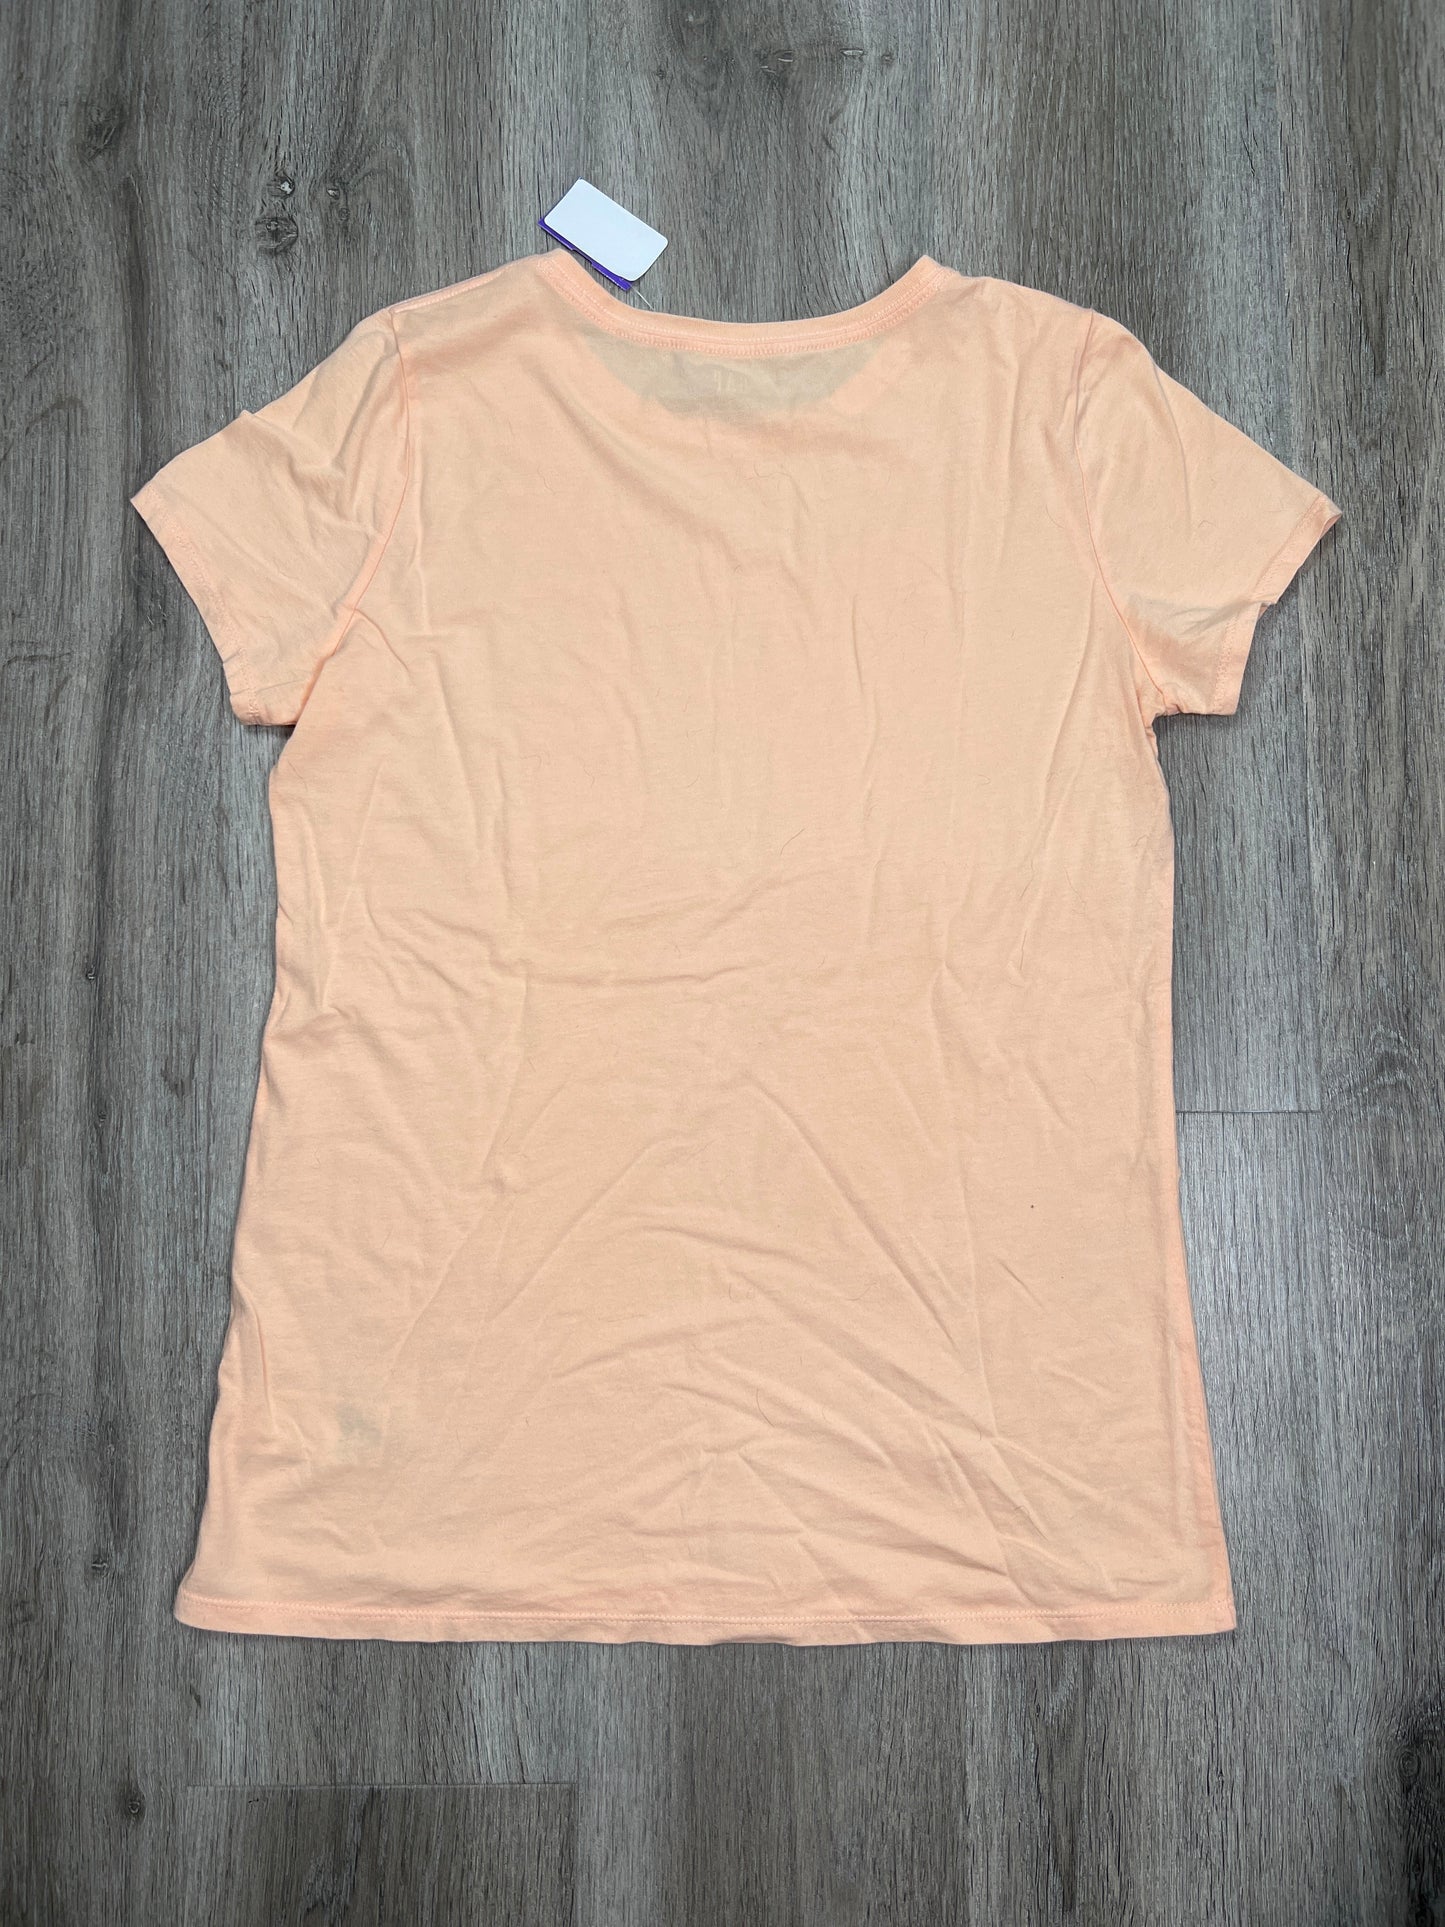 Peach Top Short Sleeve Basic Gap, Size S